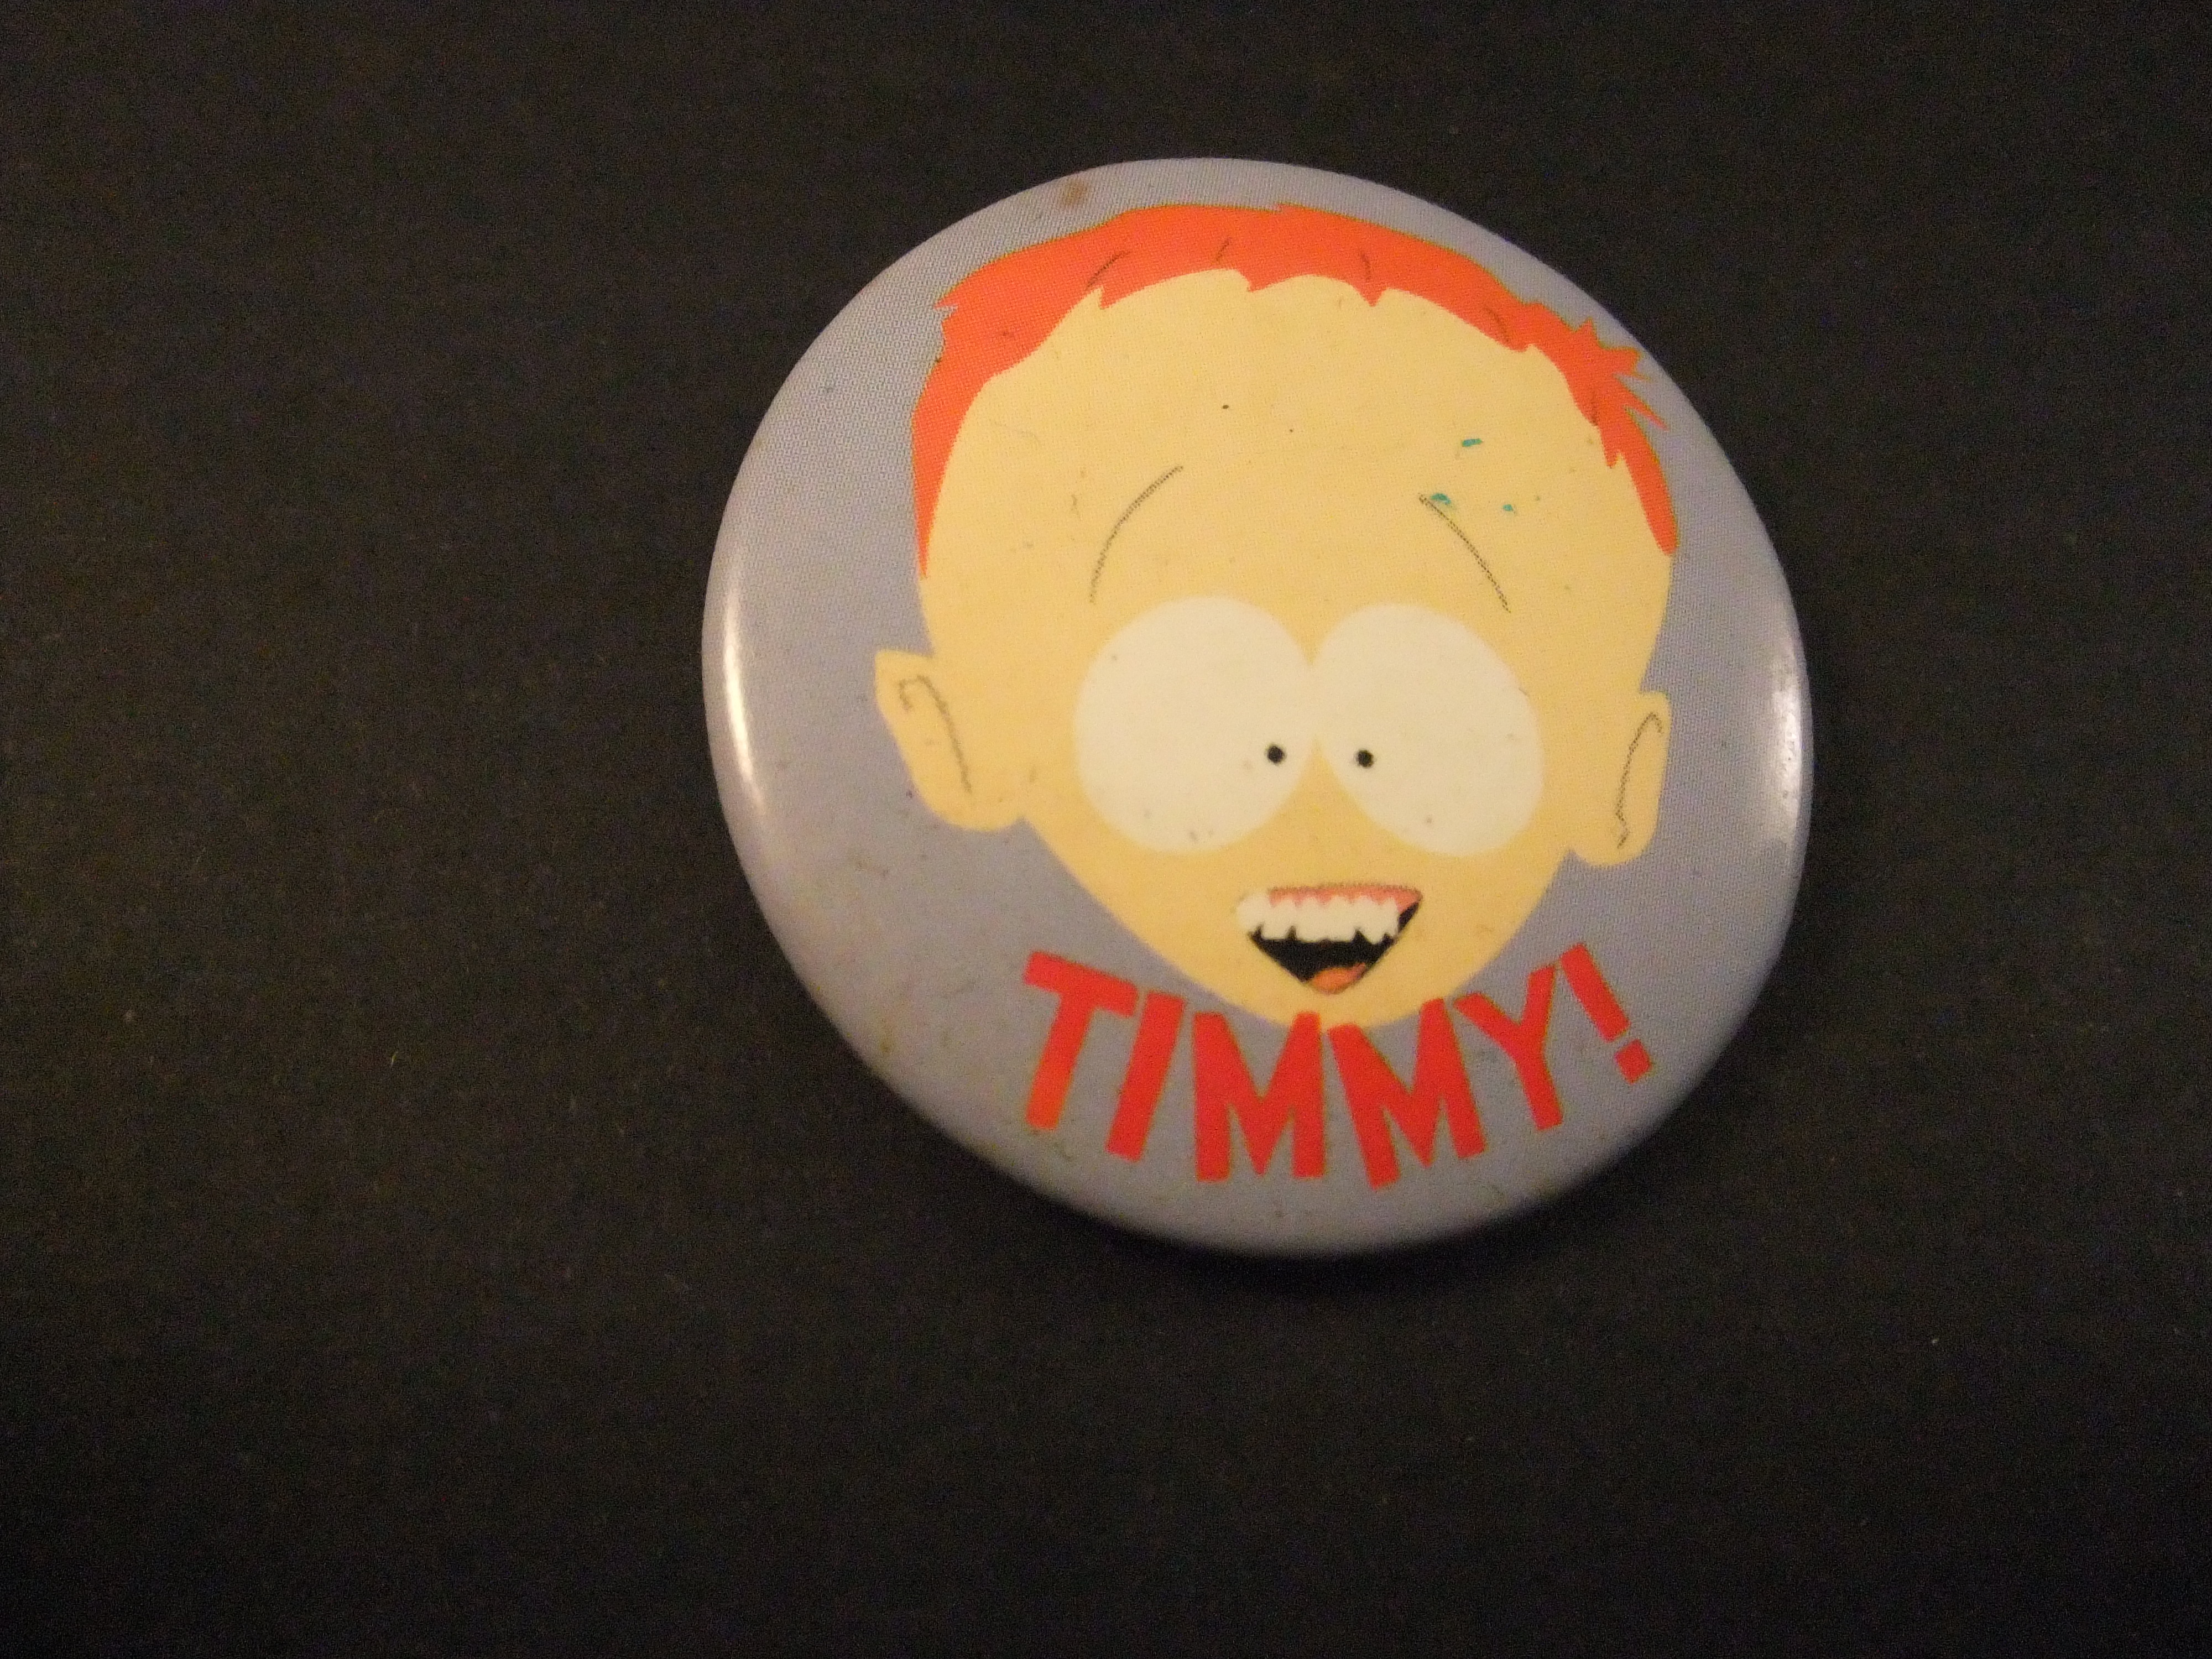 Timmy Burch personage uit de animatieserie South Park